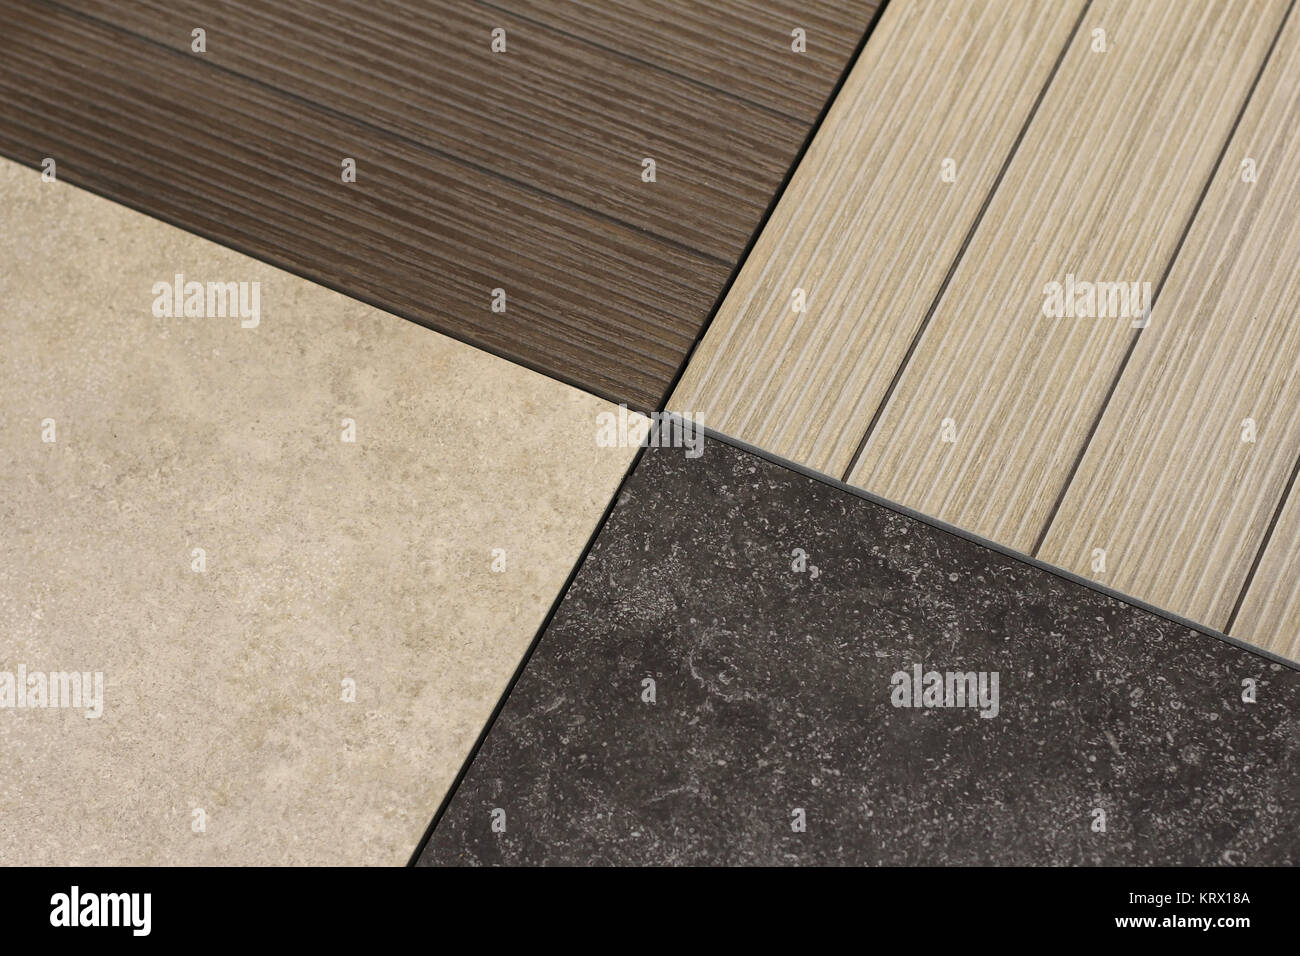 Floor material samples Stock Photo